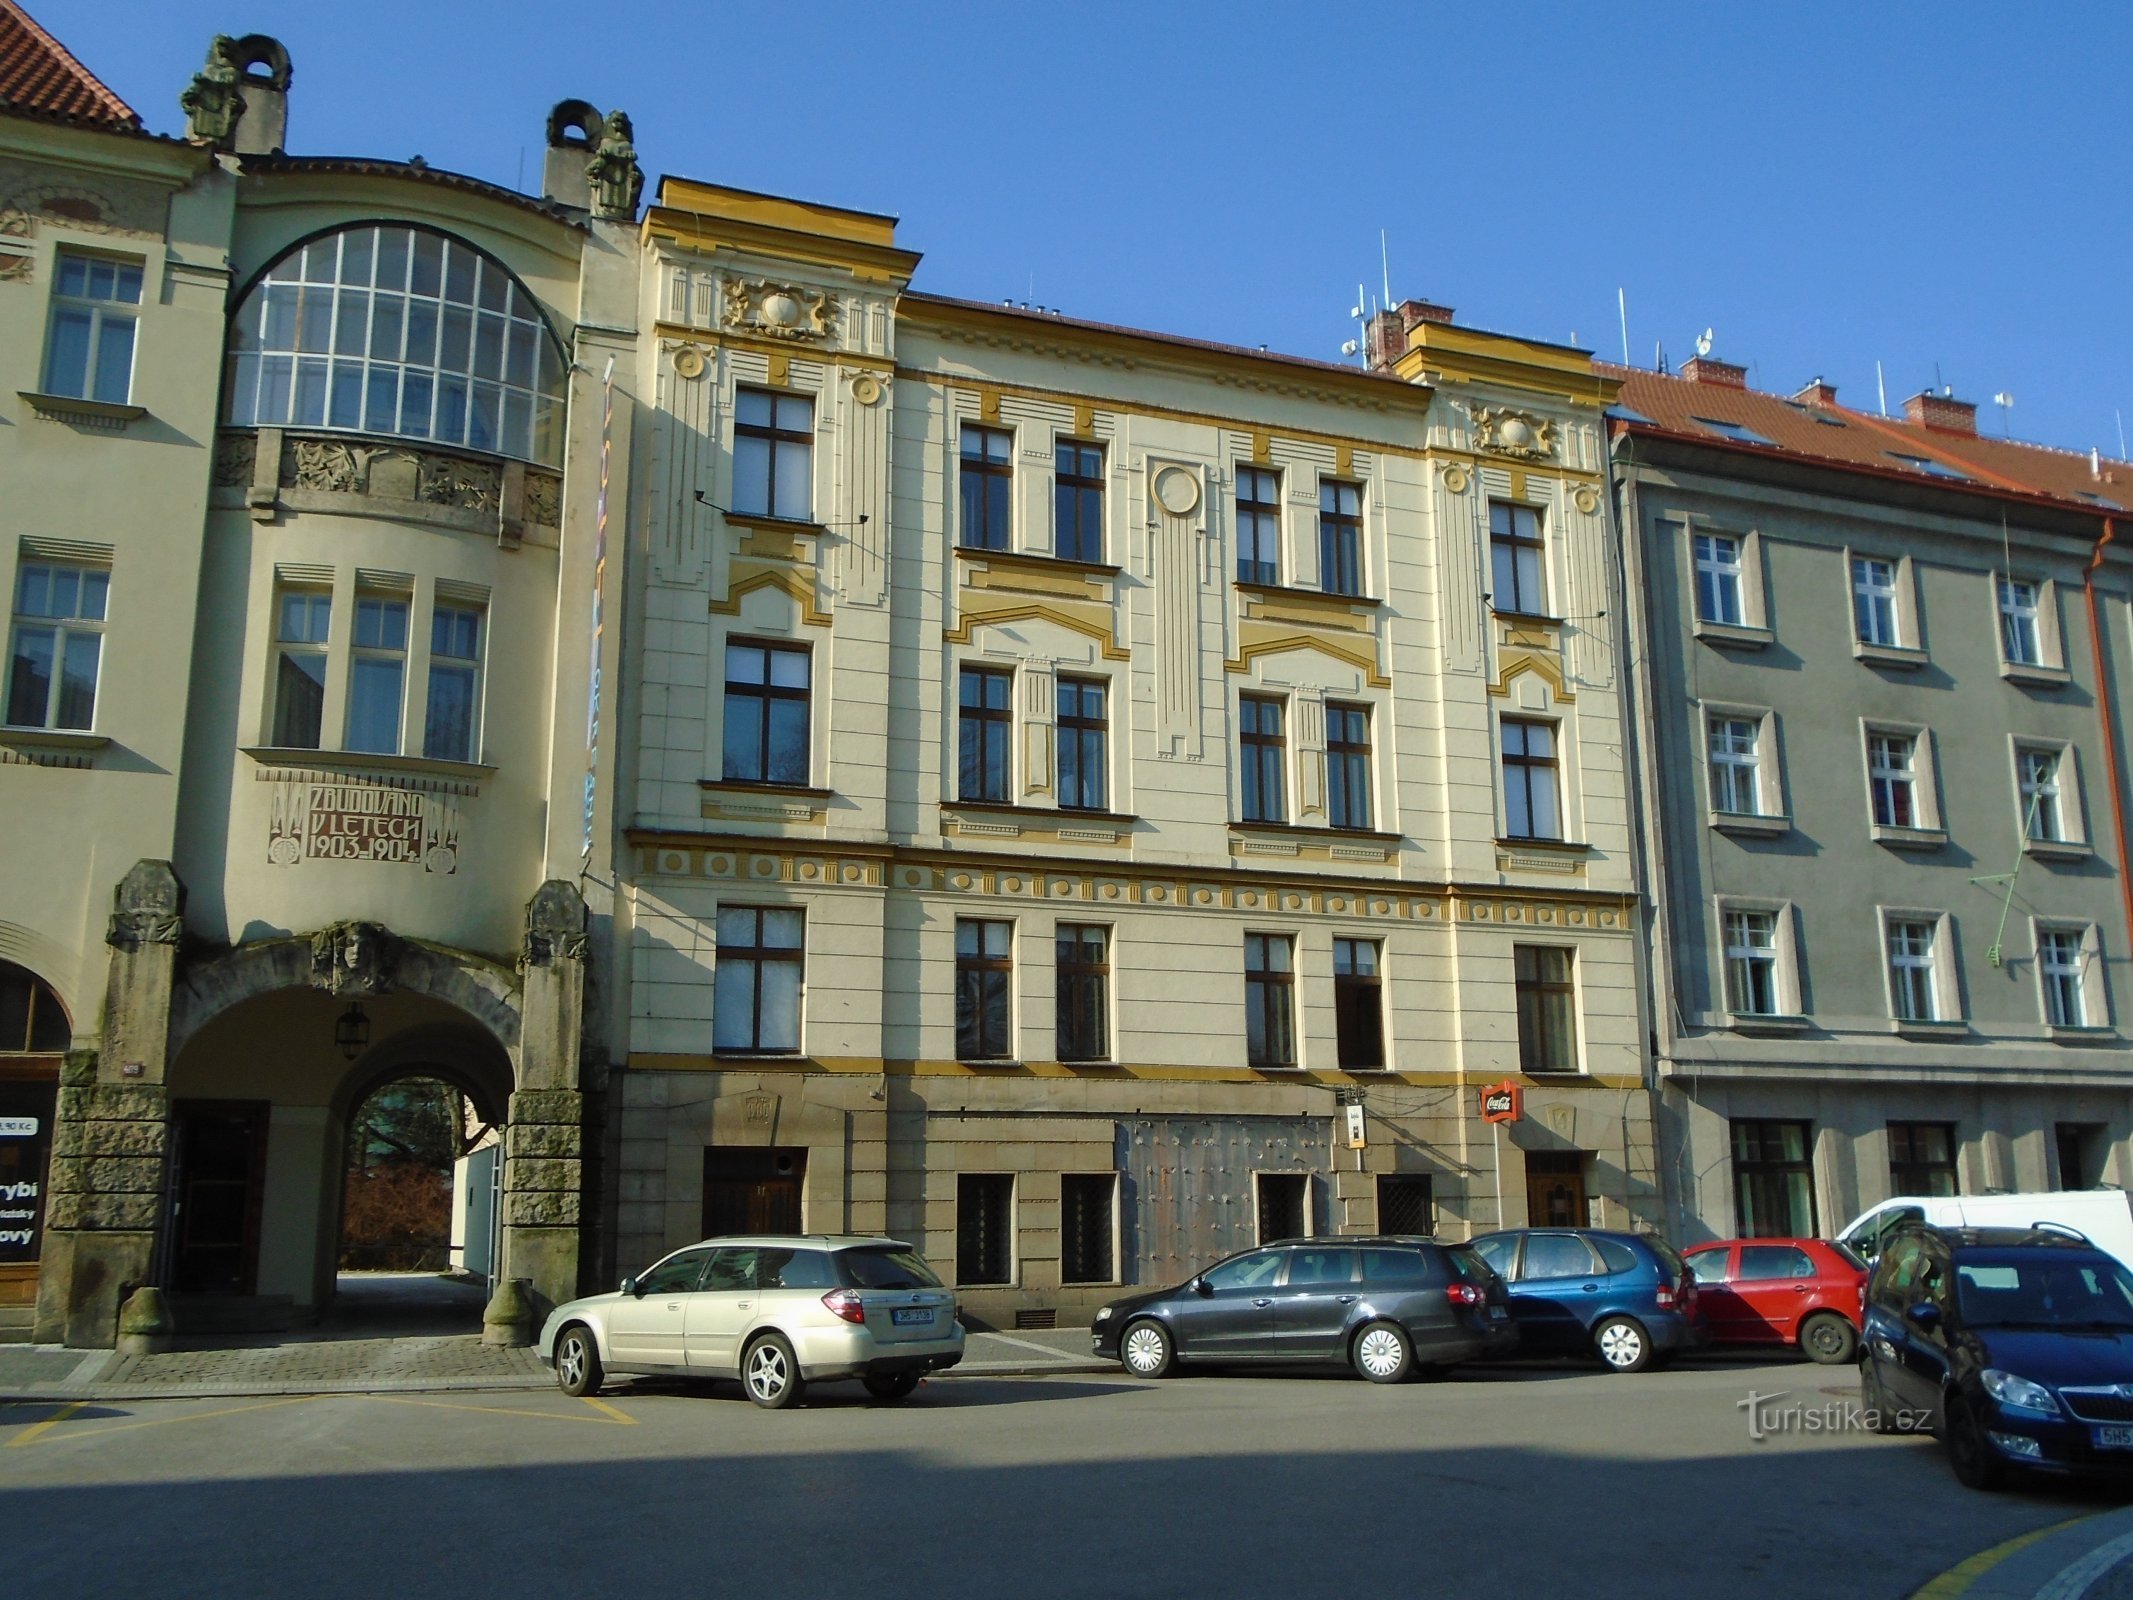 Palackého No. 359 (Hradec Králové)